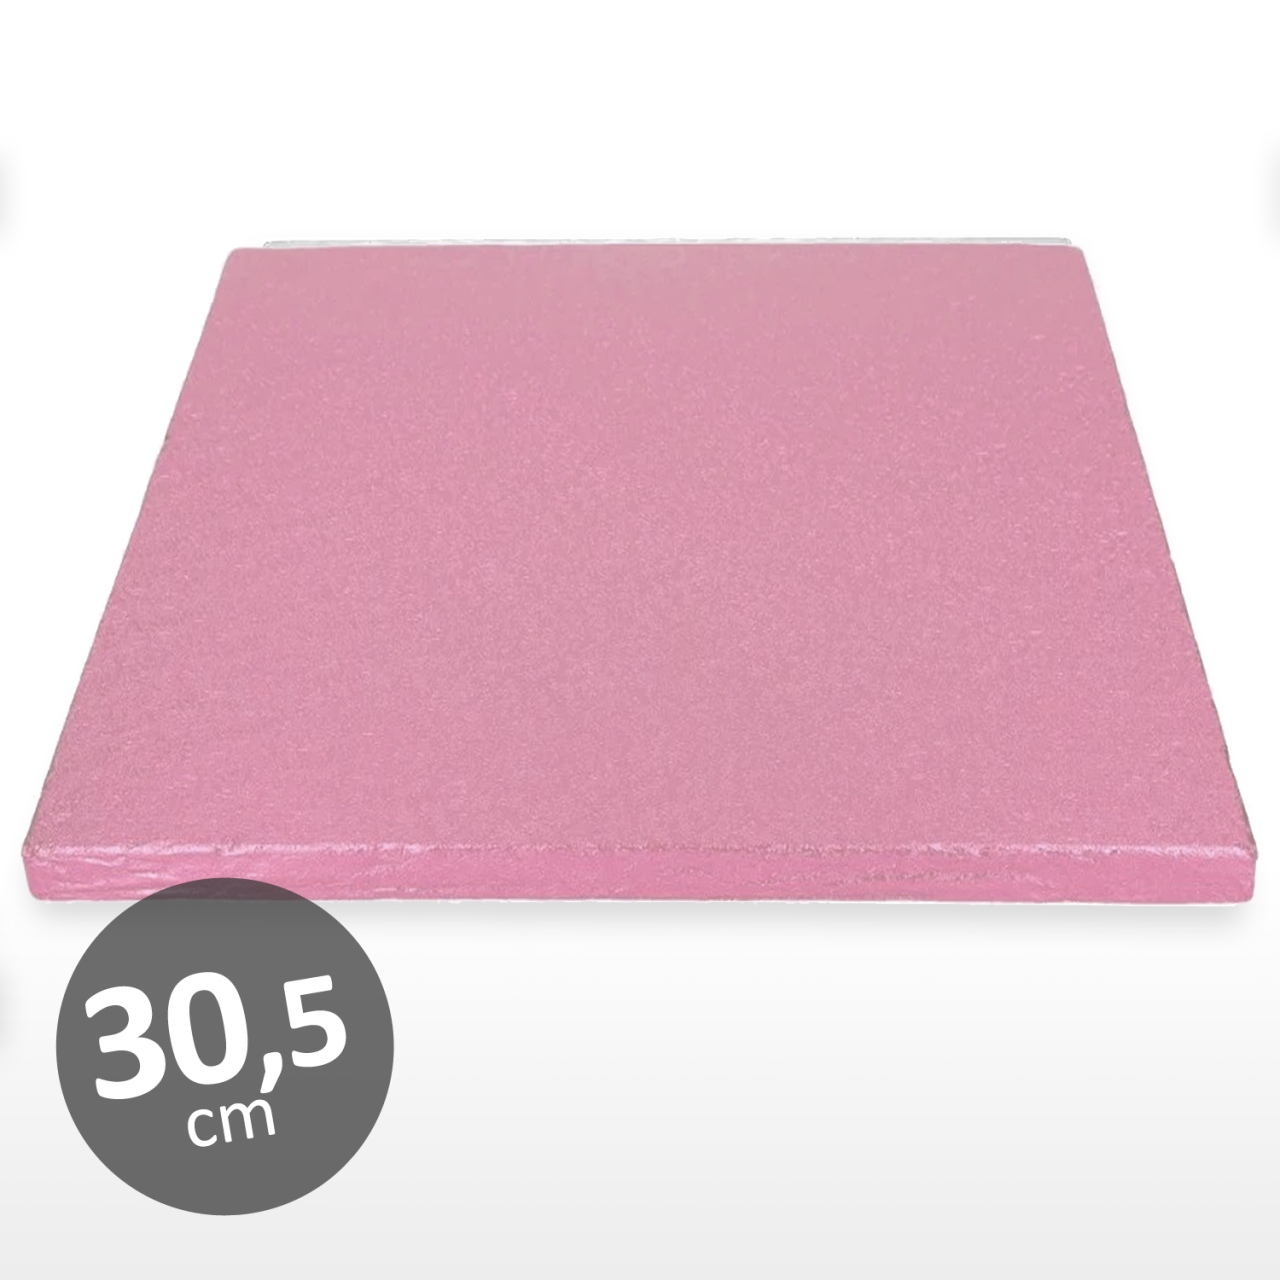 Cake Board quadratisch 30 cm rosa